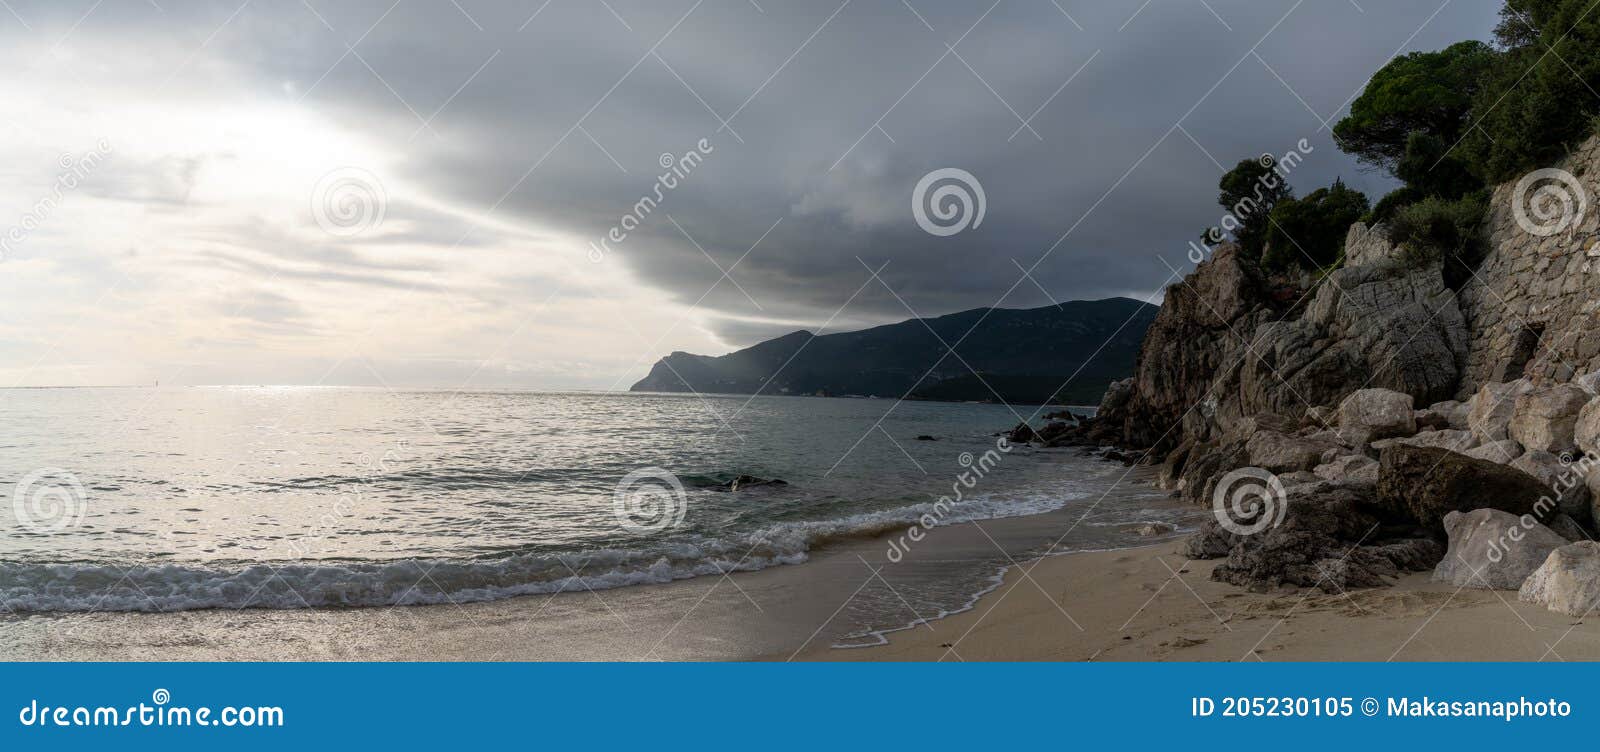 panorama of praia da figueirinho beach on the costa azul in southern portugal